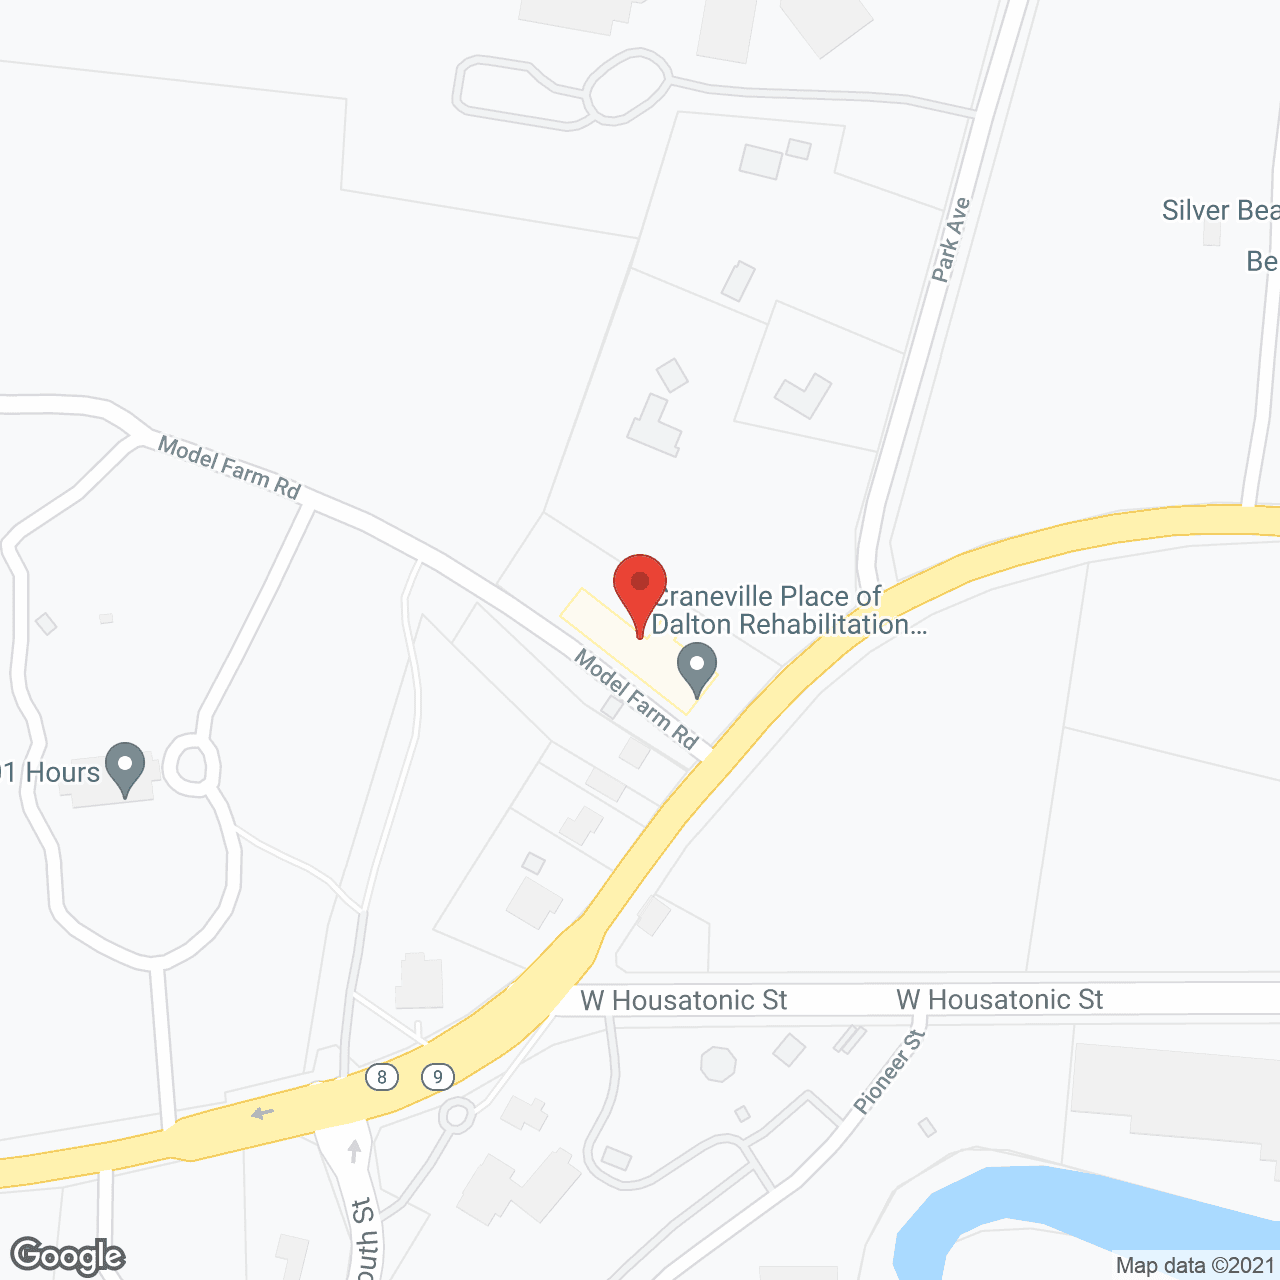 Craneville Place of Dalton in google map